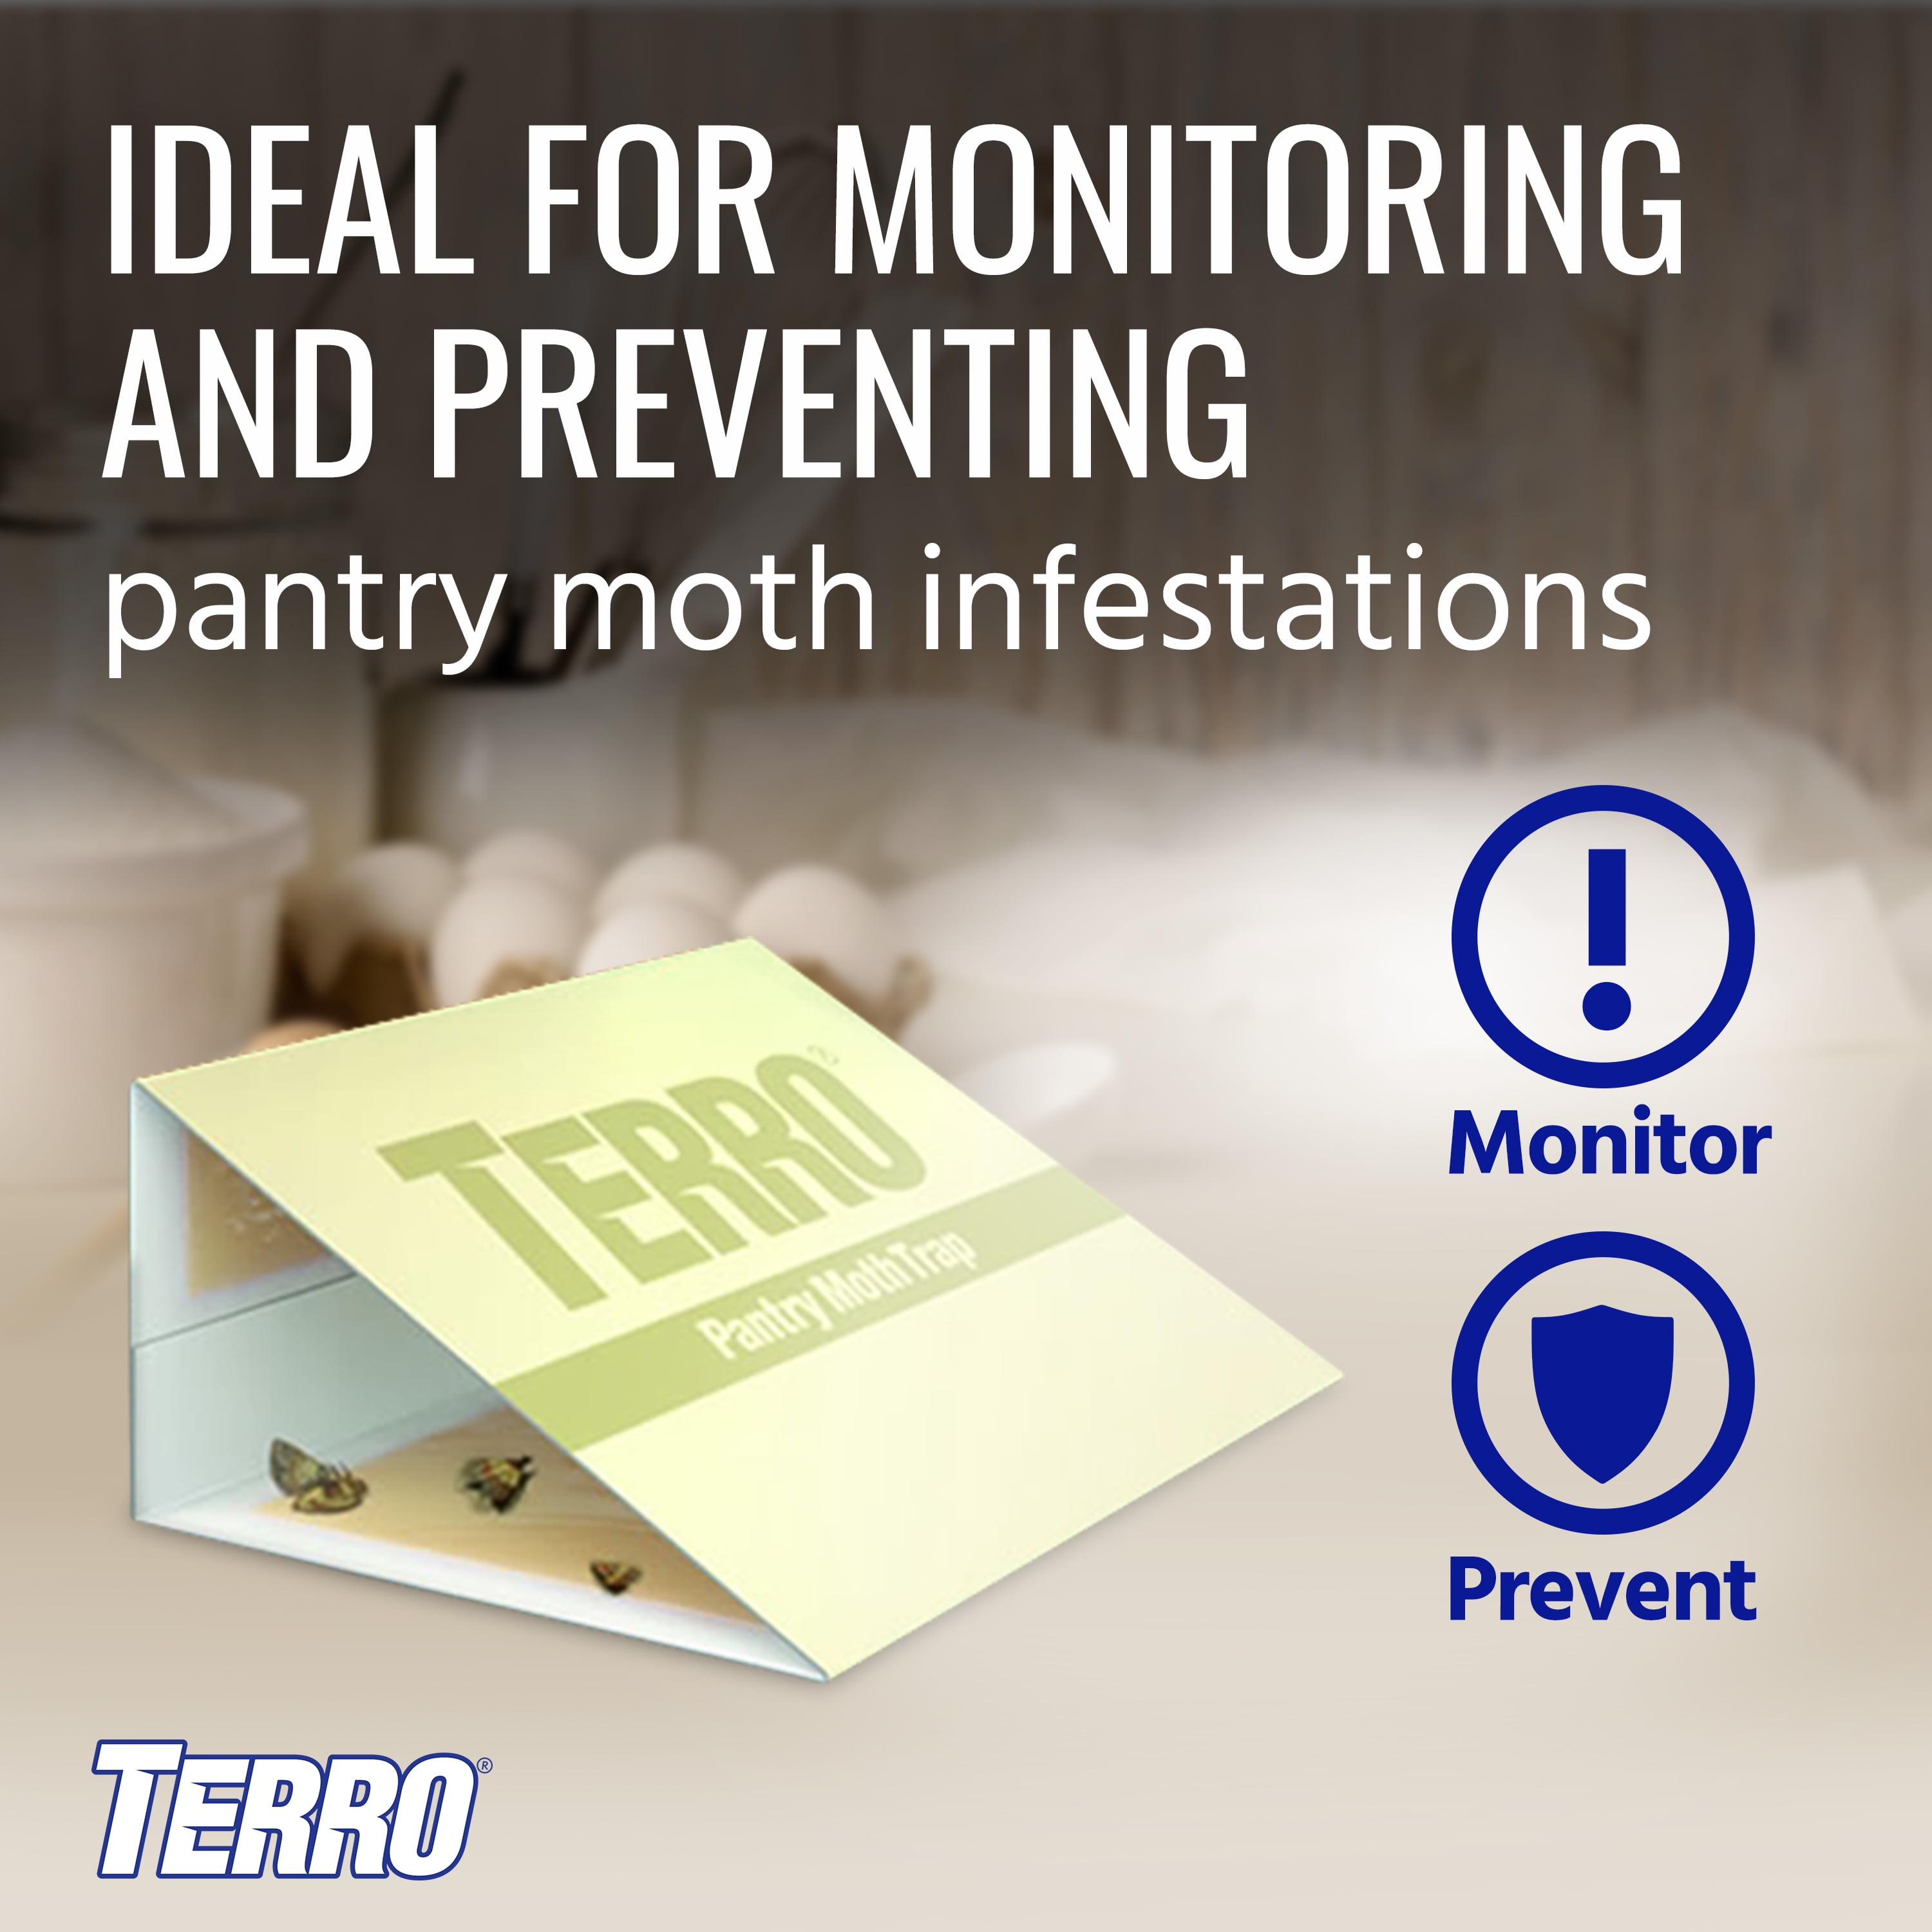 TERRO® Clothes Moth Alert - 1 Pack